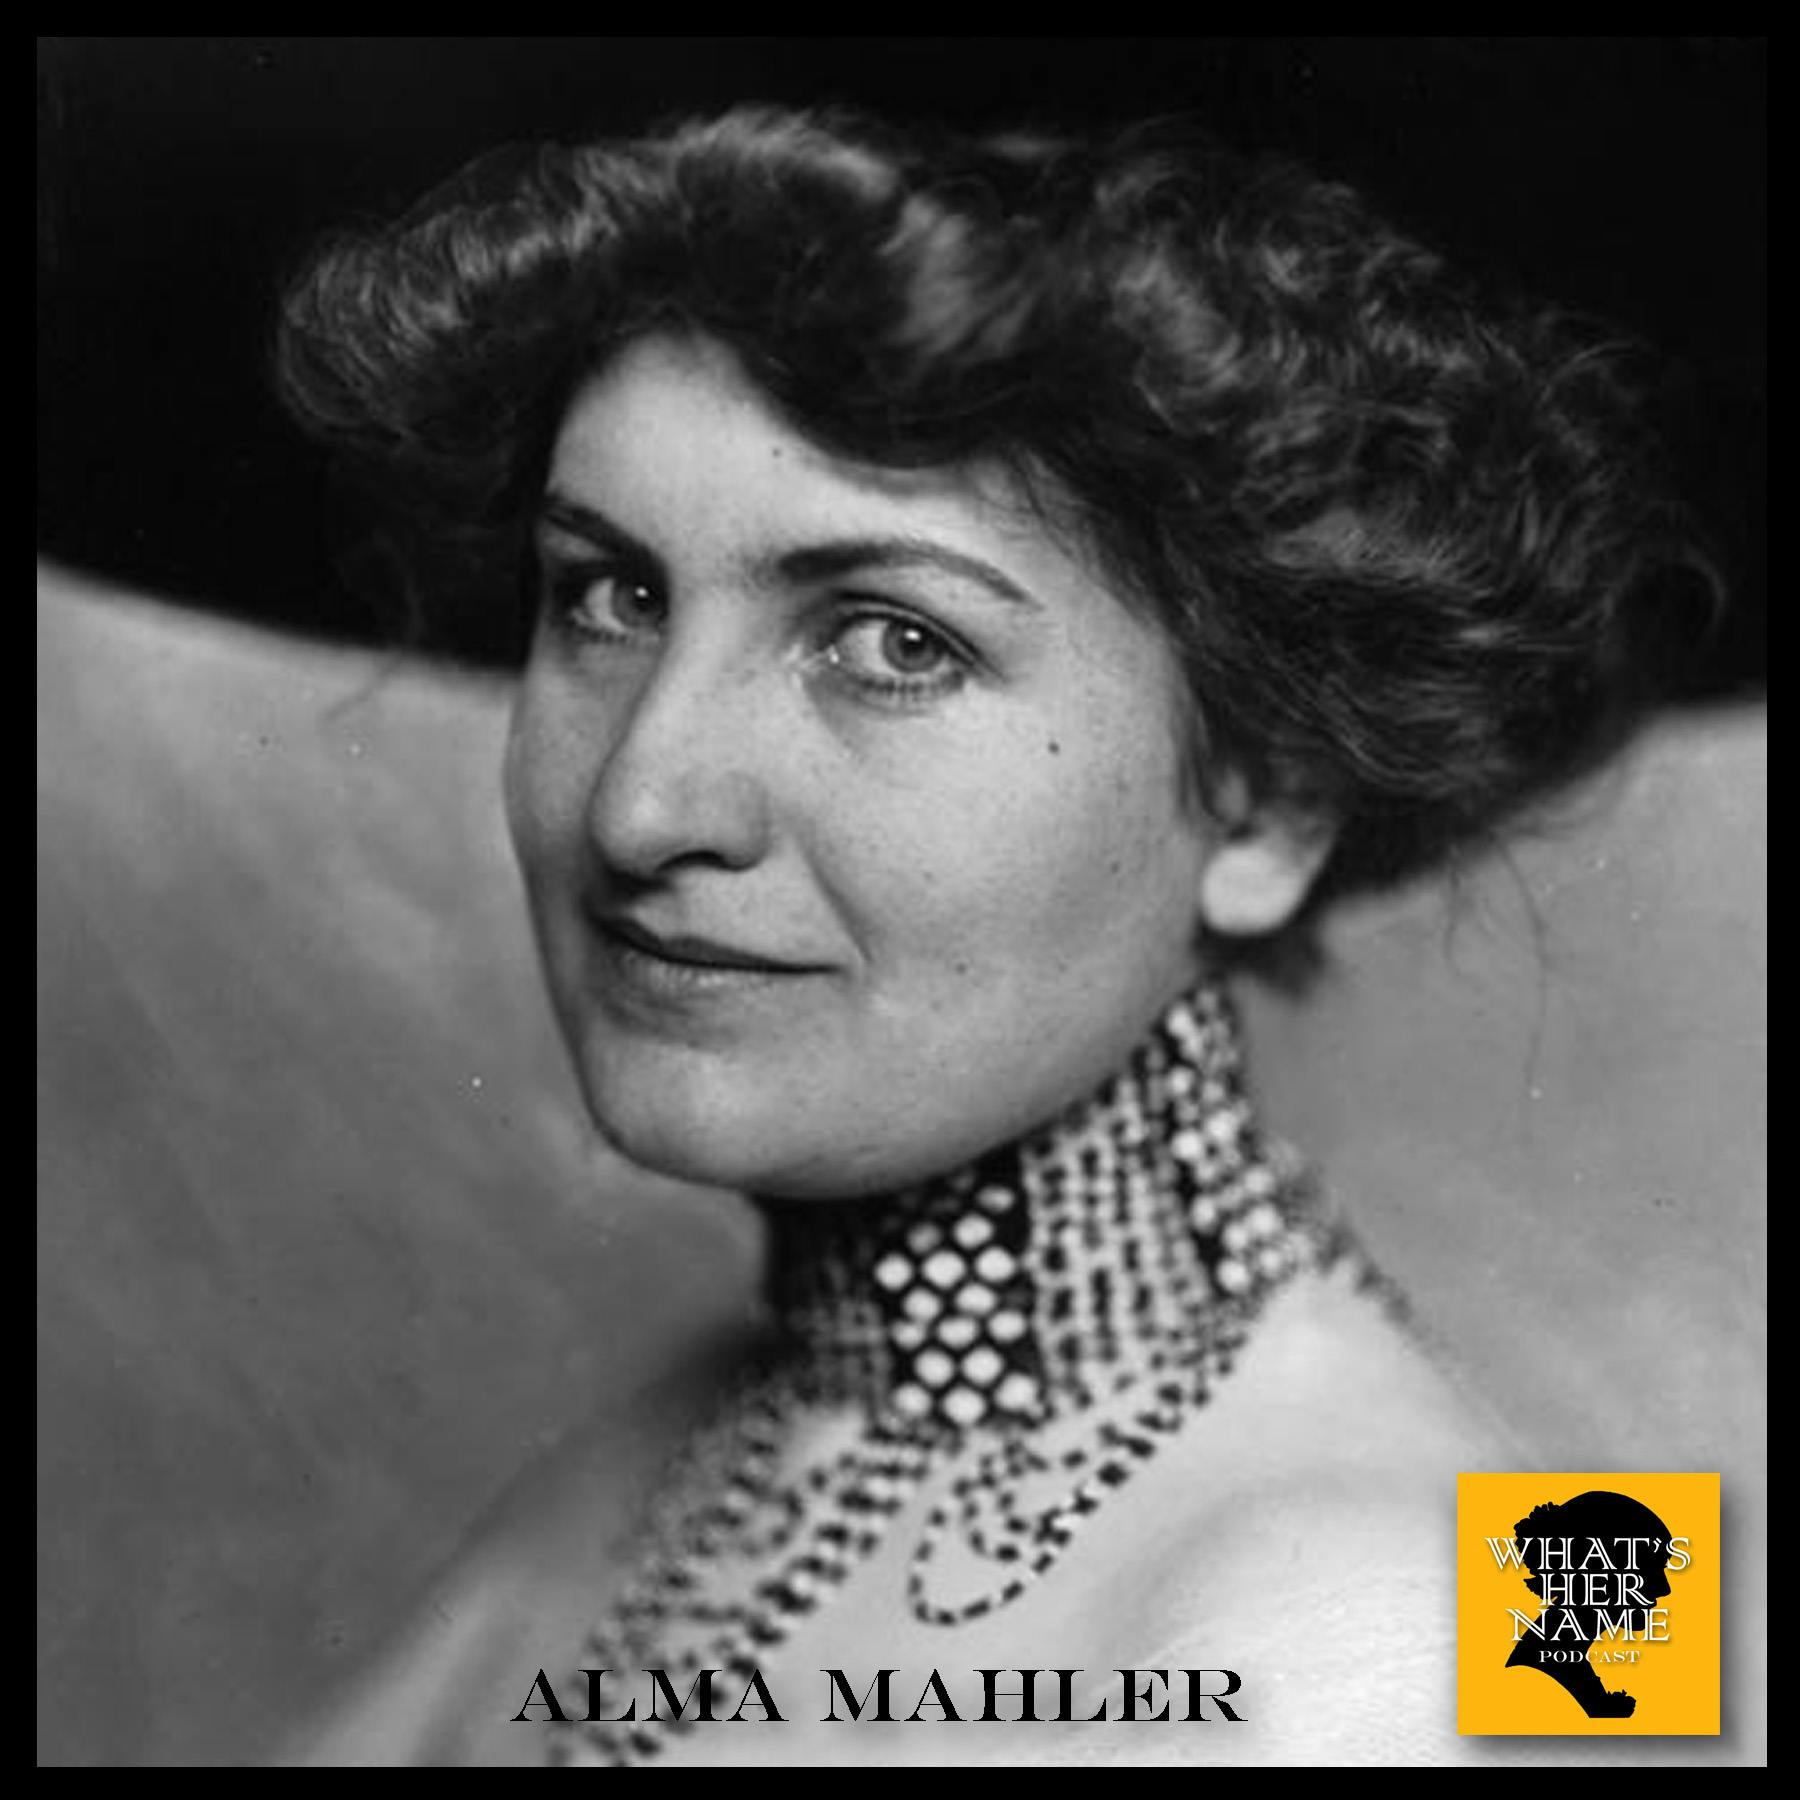 THE COMPOSER Alma Mahler